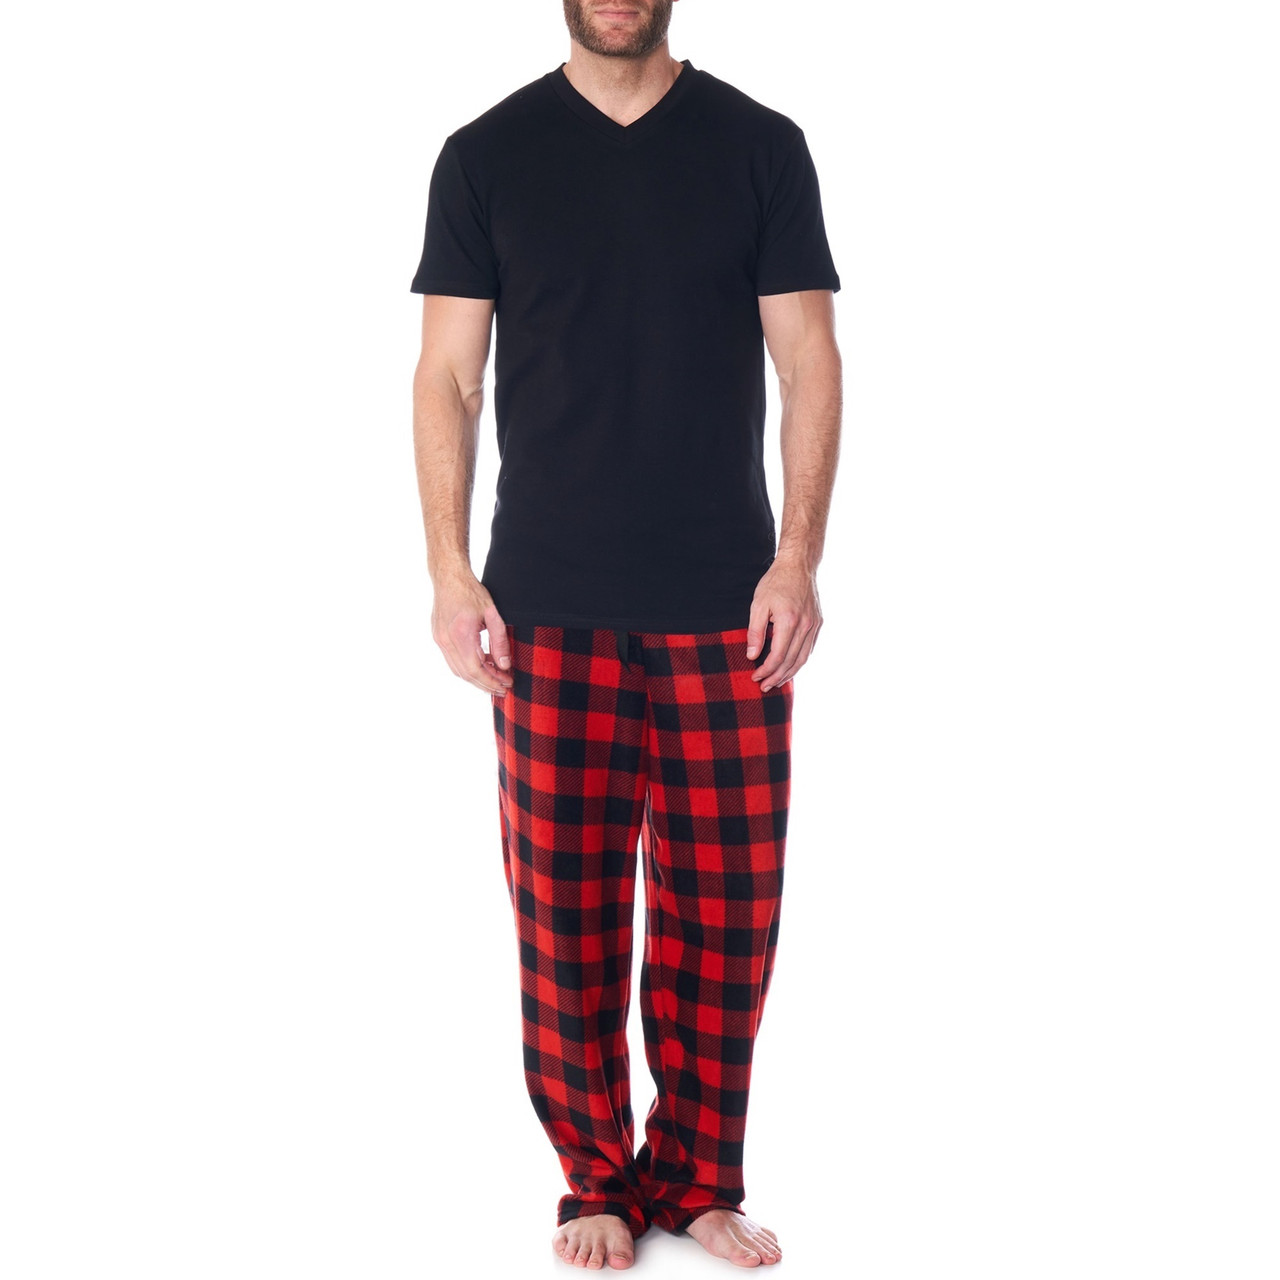 Womens Flannel Pajama Pants-Plaid Lounge Pants, Cotton Blend Pajama Bottoms